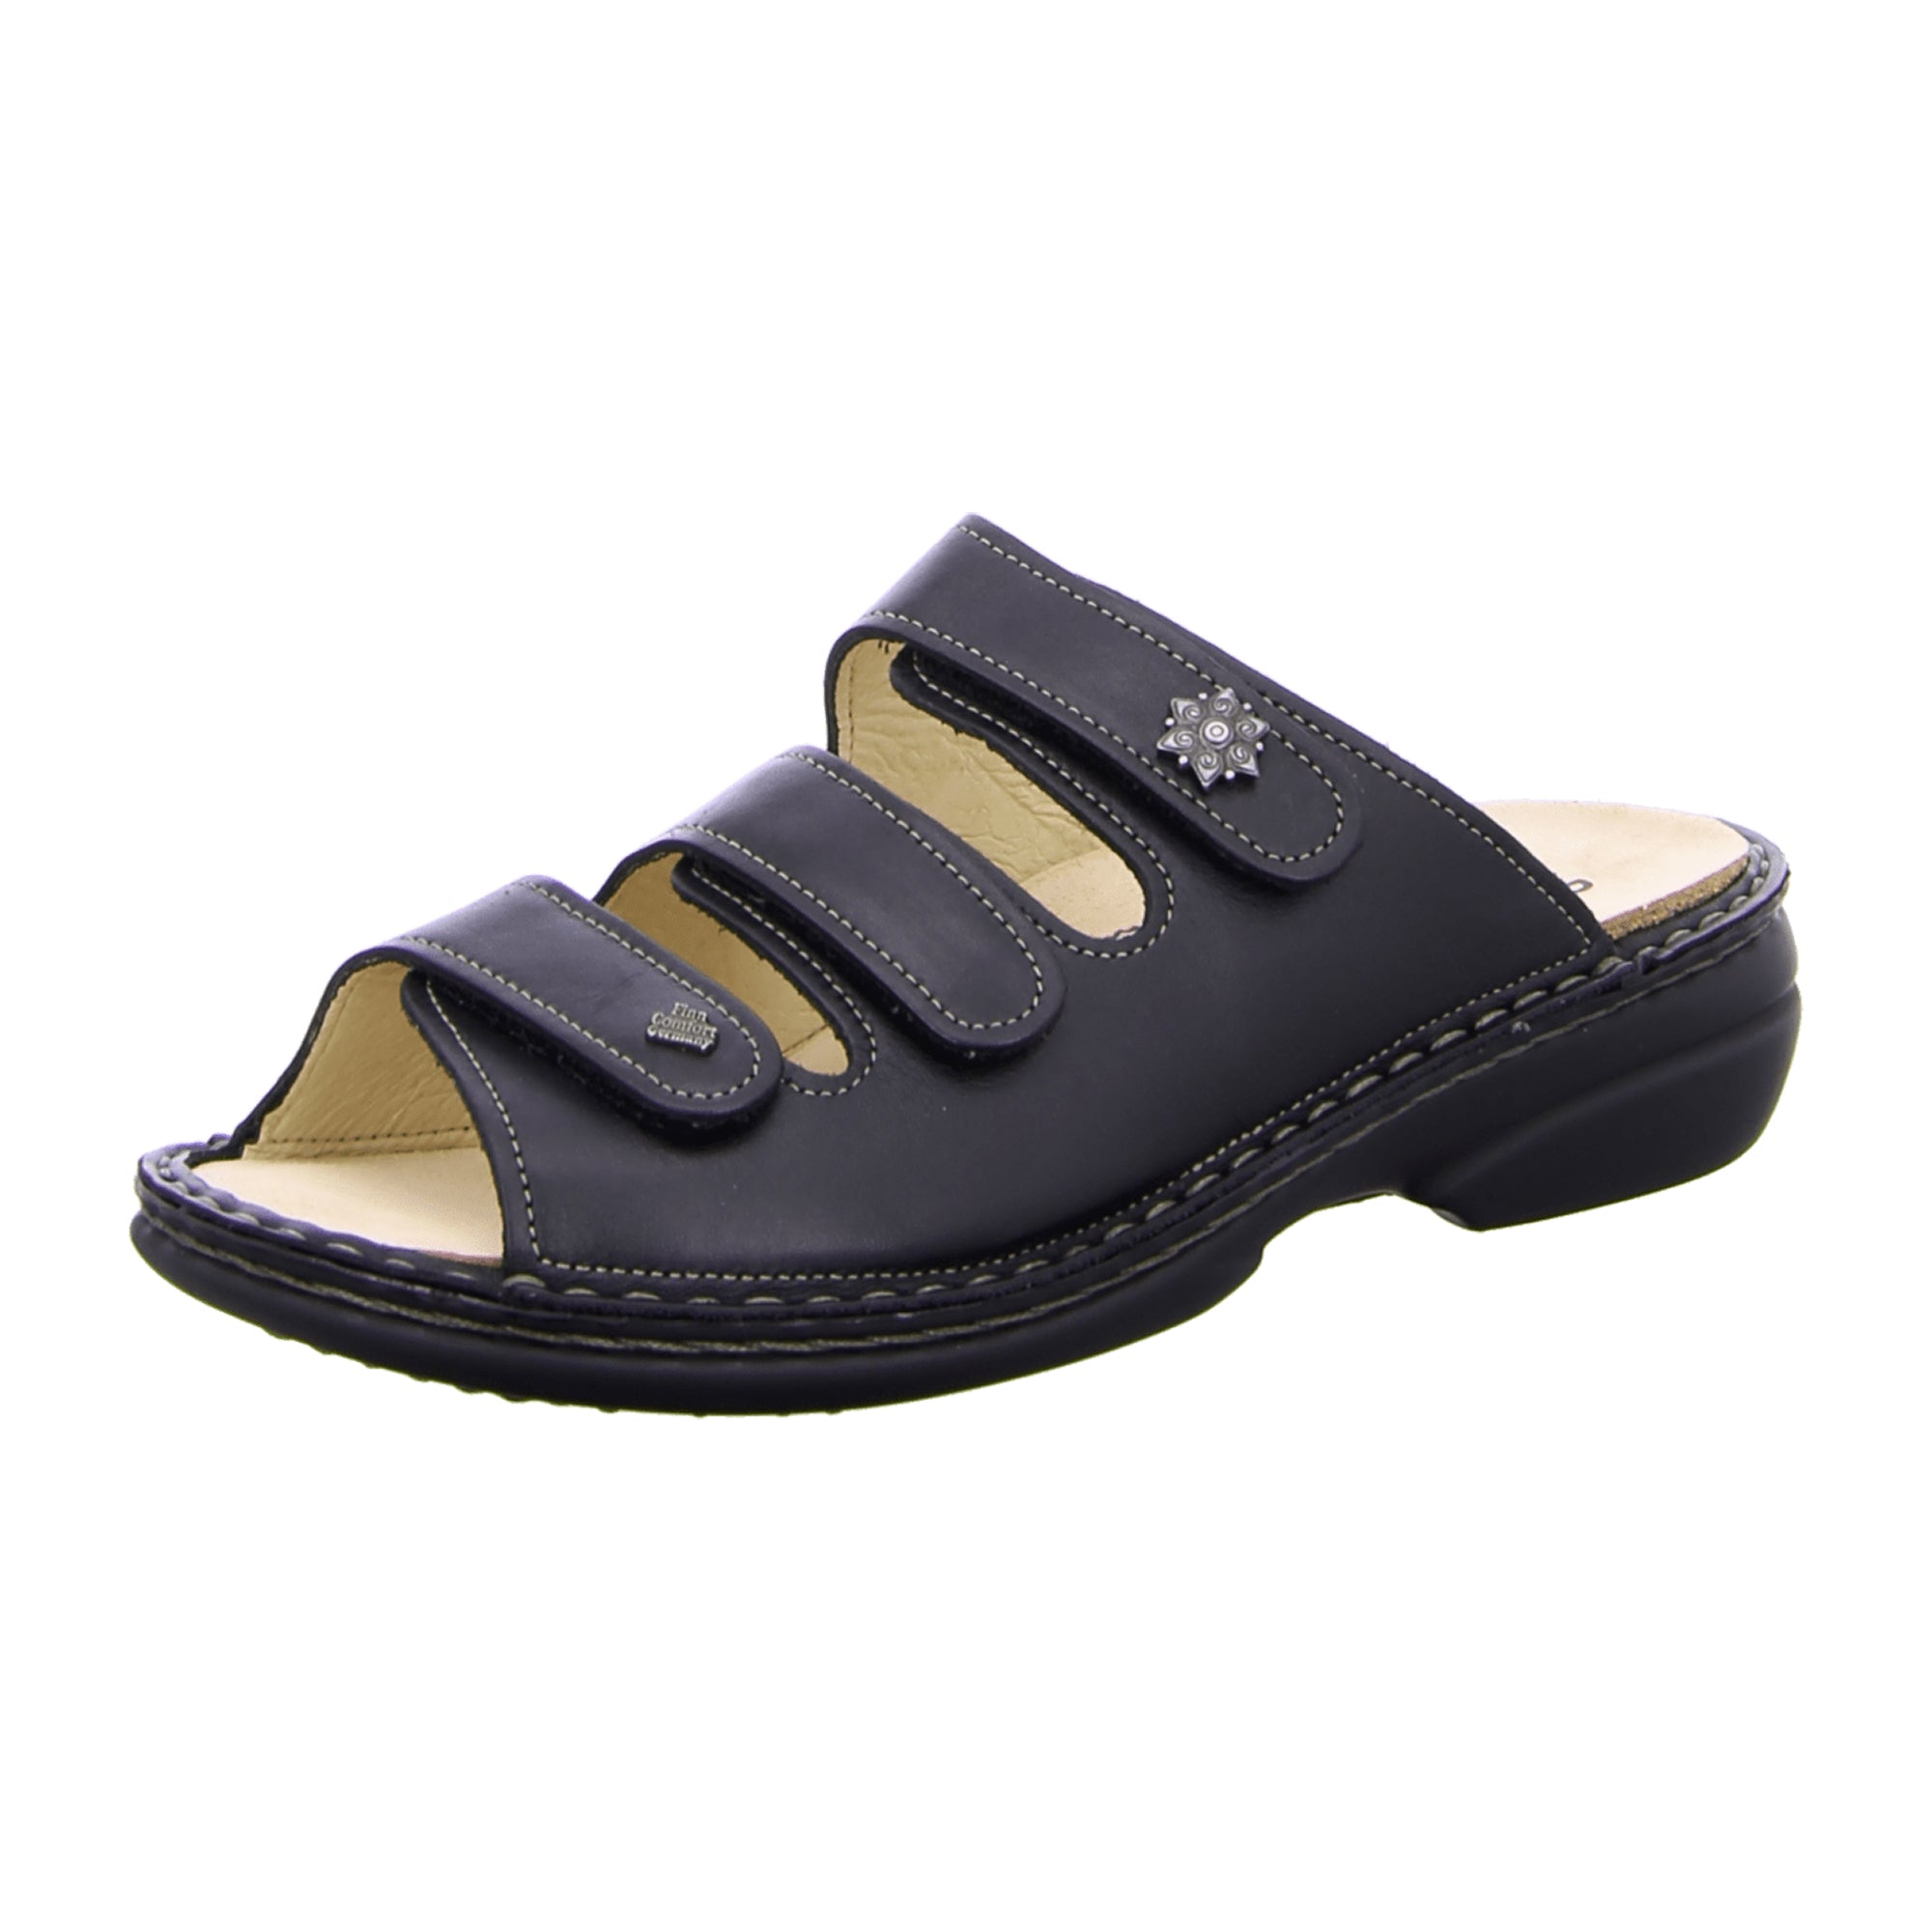 Finn Comfort Menorca-S Black Sandals for Women - Stylish & Durable